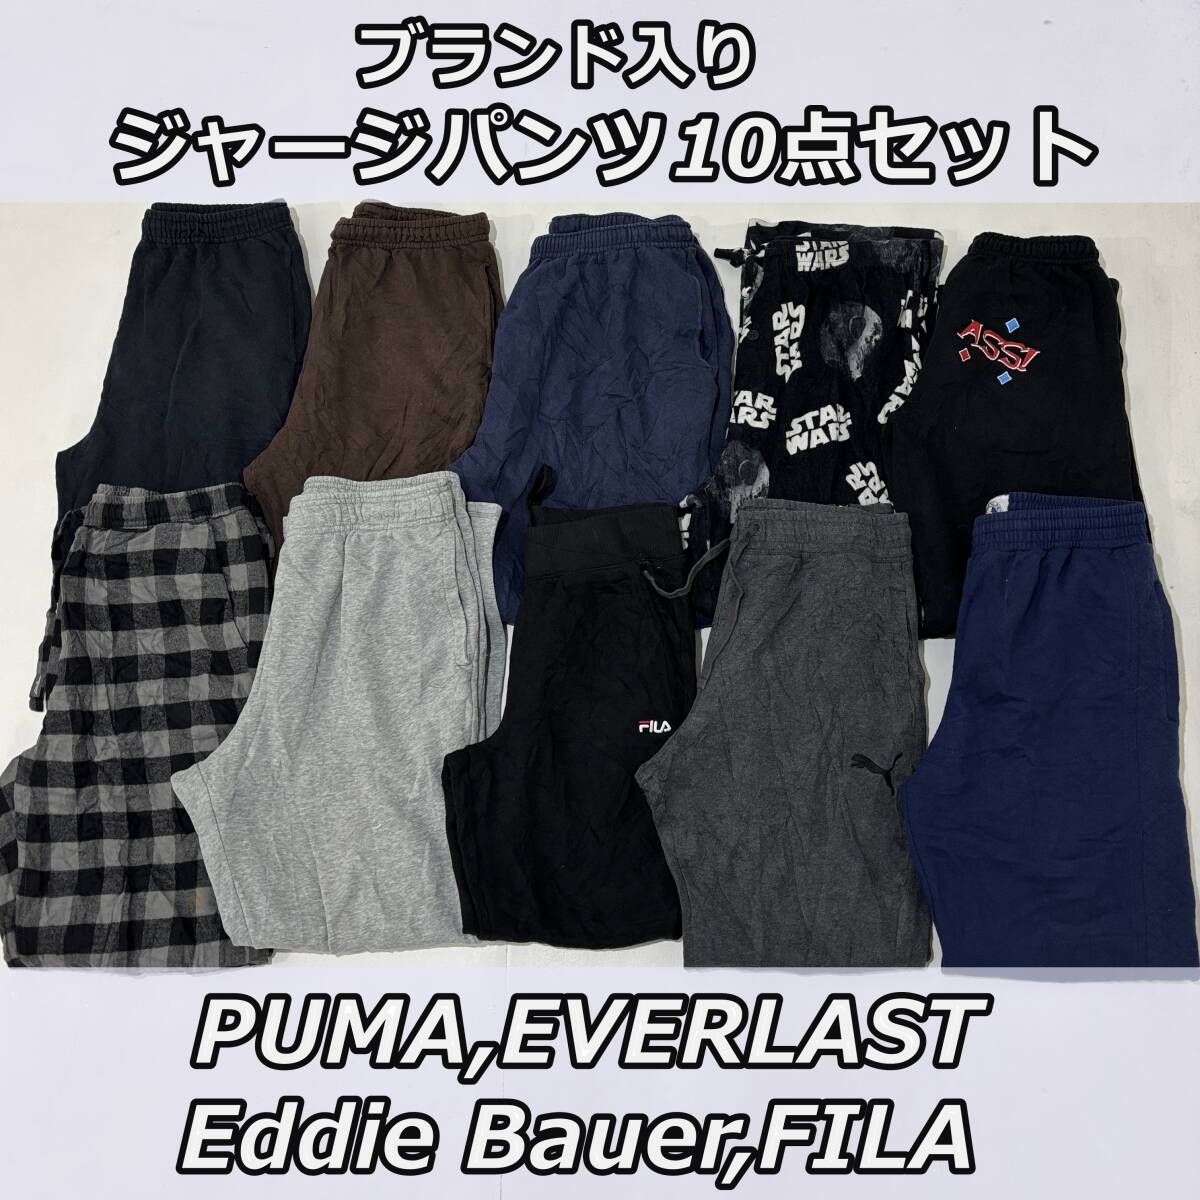 Sulk Sales 24 [10 -Piece Set с брендом] Puma Everlast Edybauer Fila Jersey Pants Nylon Swece Fleeme